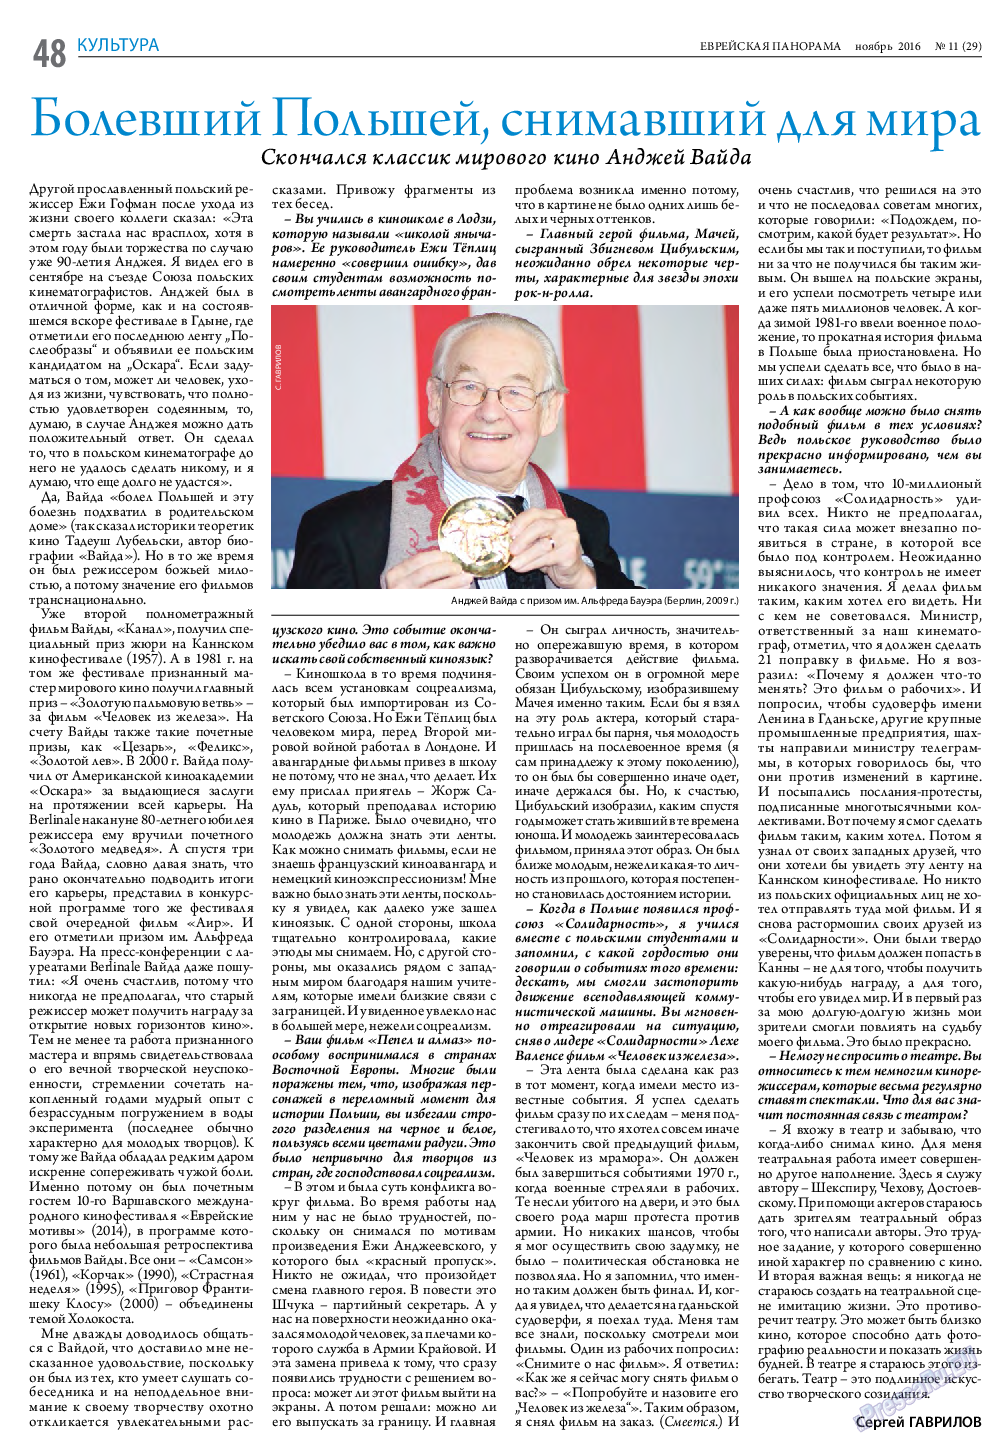 Еврейская панорама, газета. 2016 №11 стр.48